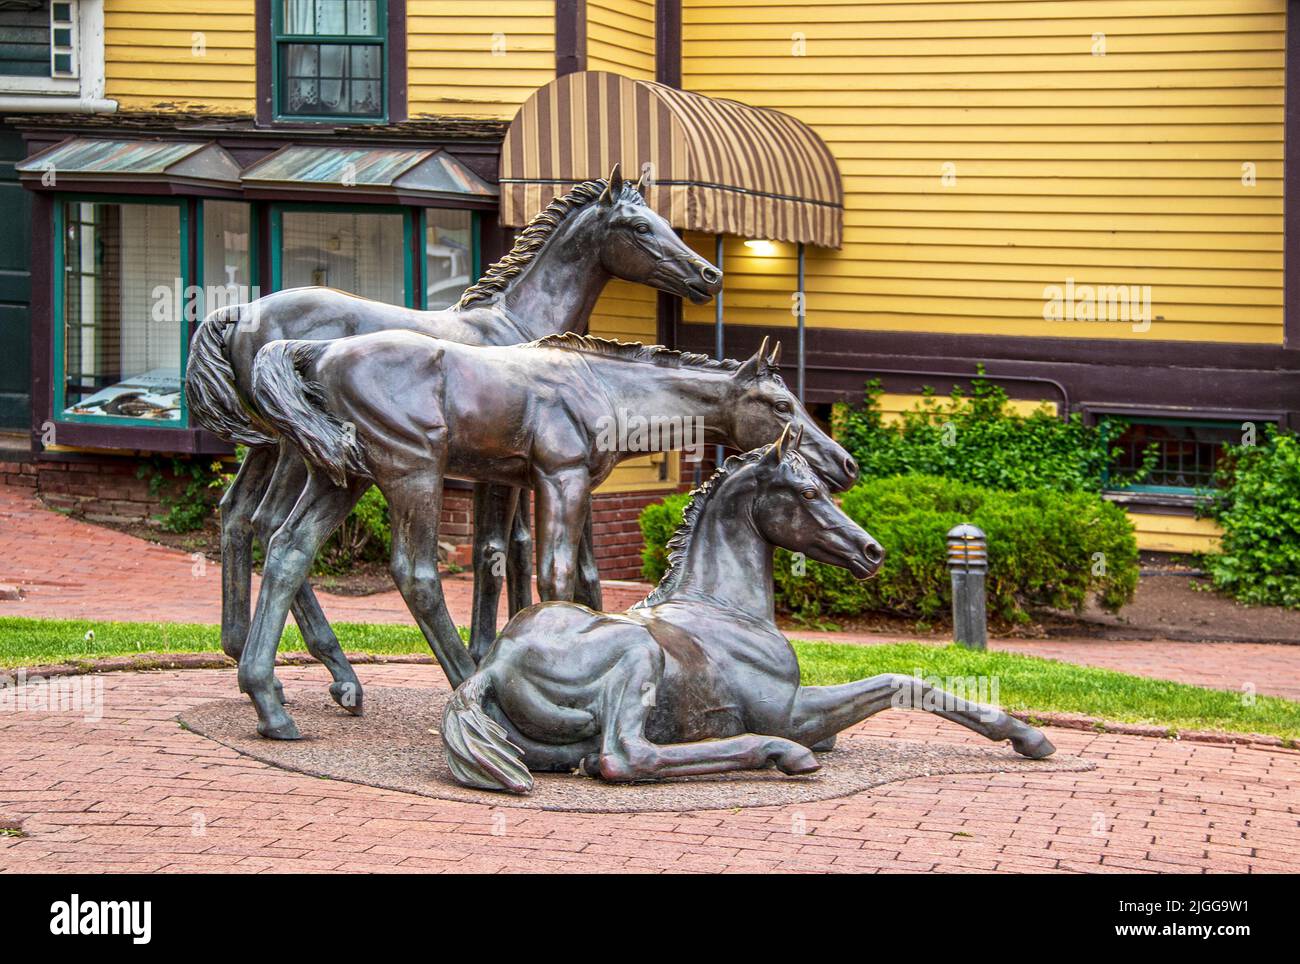 2021 05 22 Durango Co USA - Statue of three beautiful horses outside historic train station in downtown Durango Stock Photo